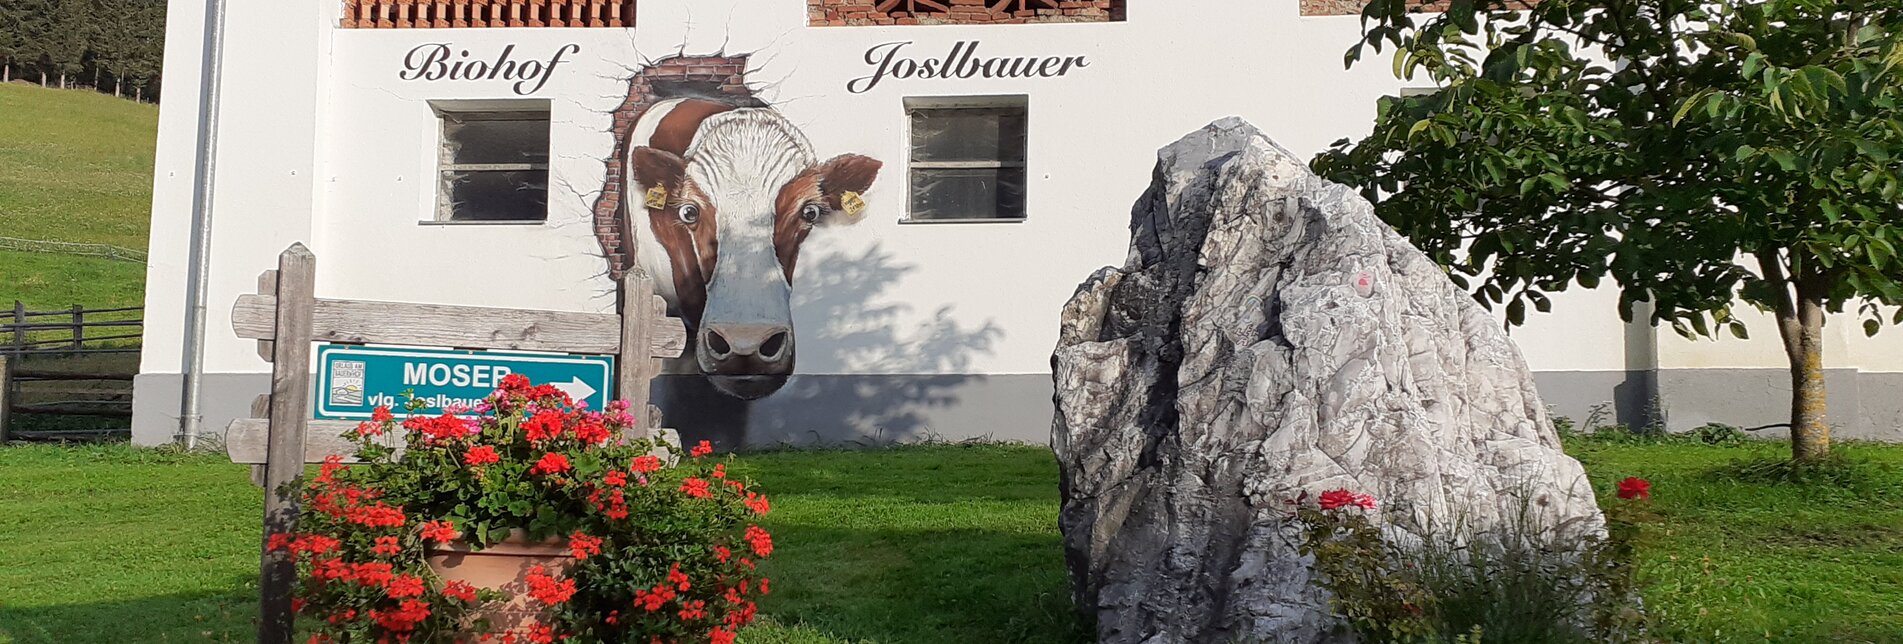 Ausflug zum Biohof Joslbauer in Murau | © Biohof Joslbauer